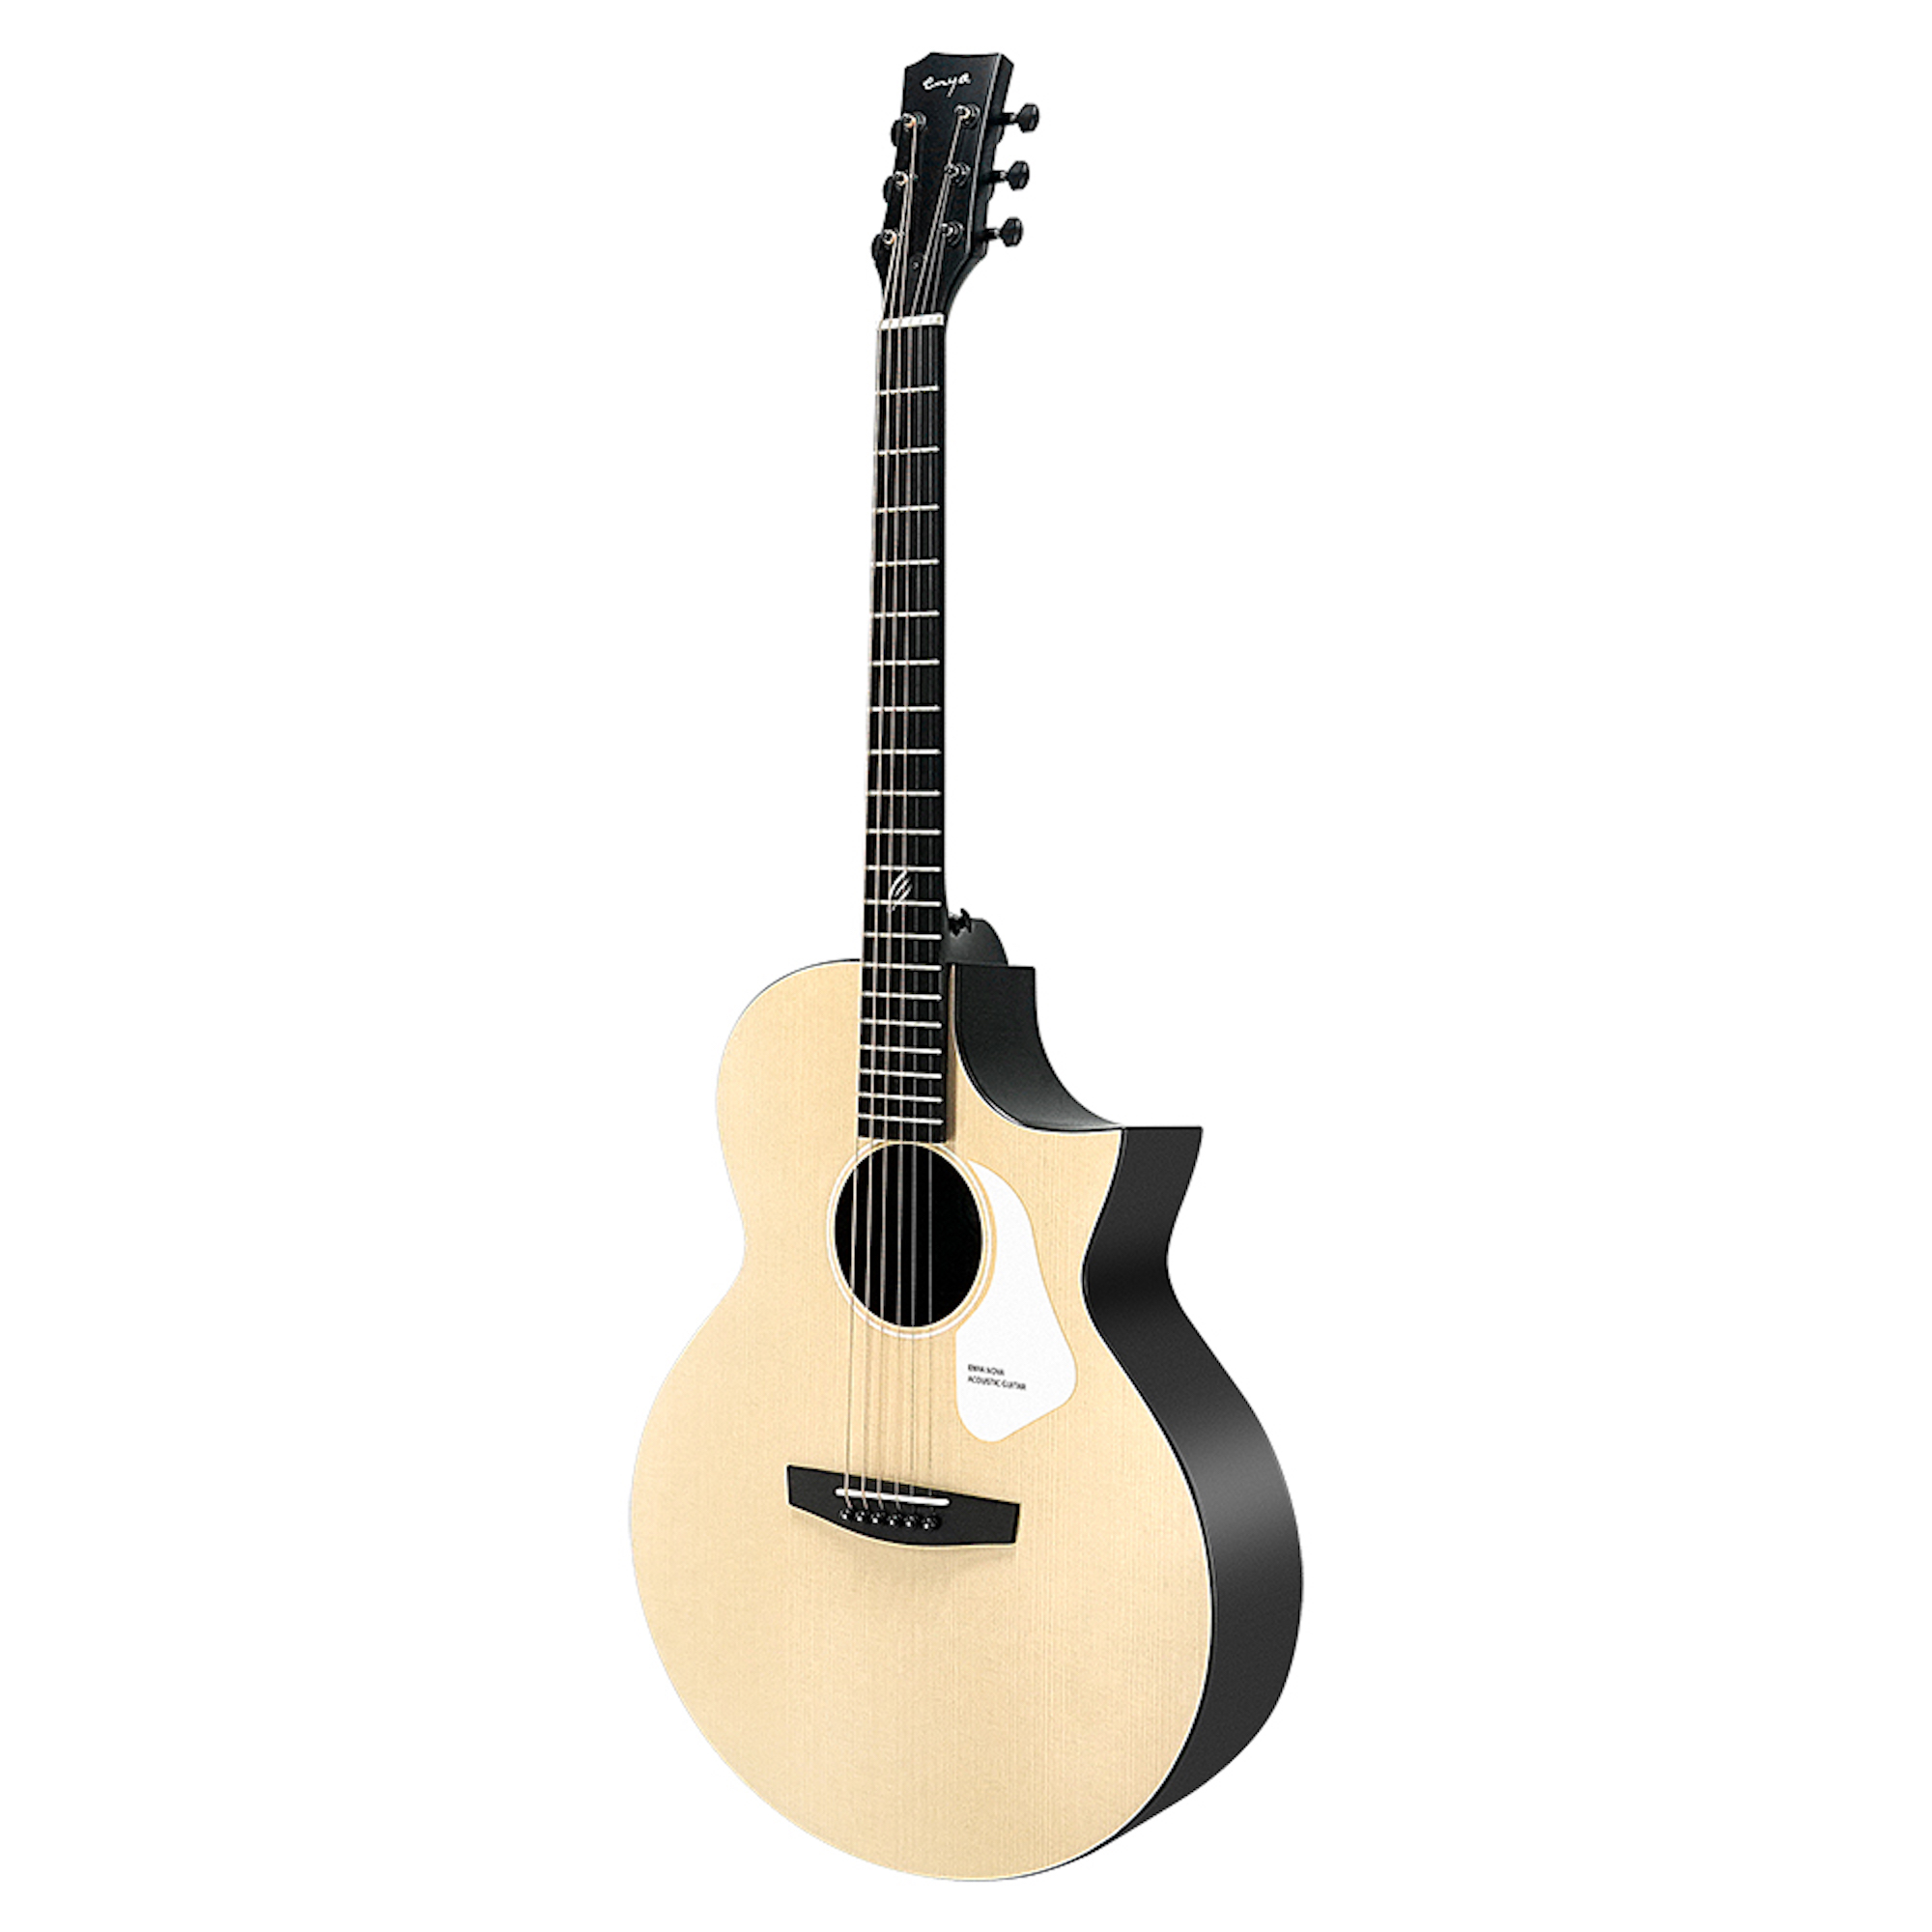 Enya Nova G Acoustic Guitar Natural online price in india